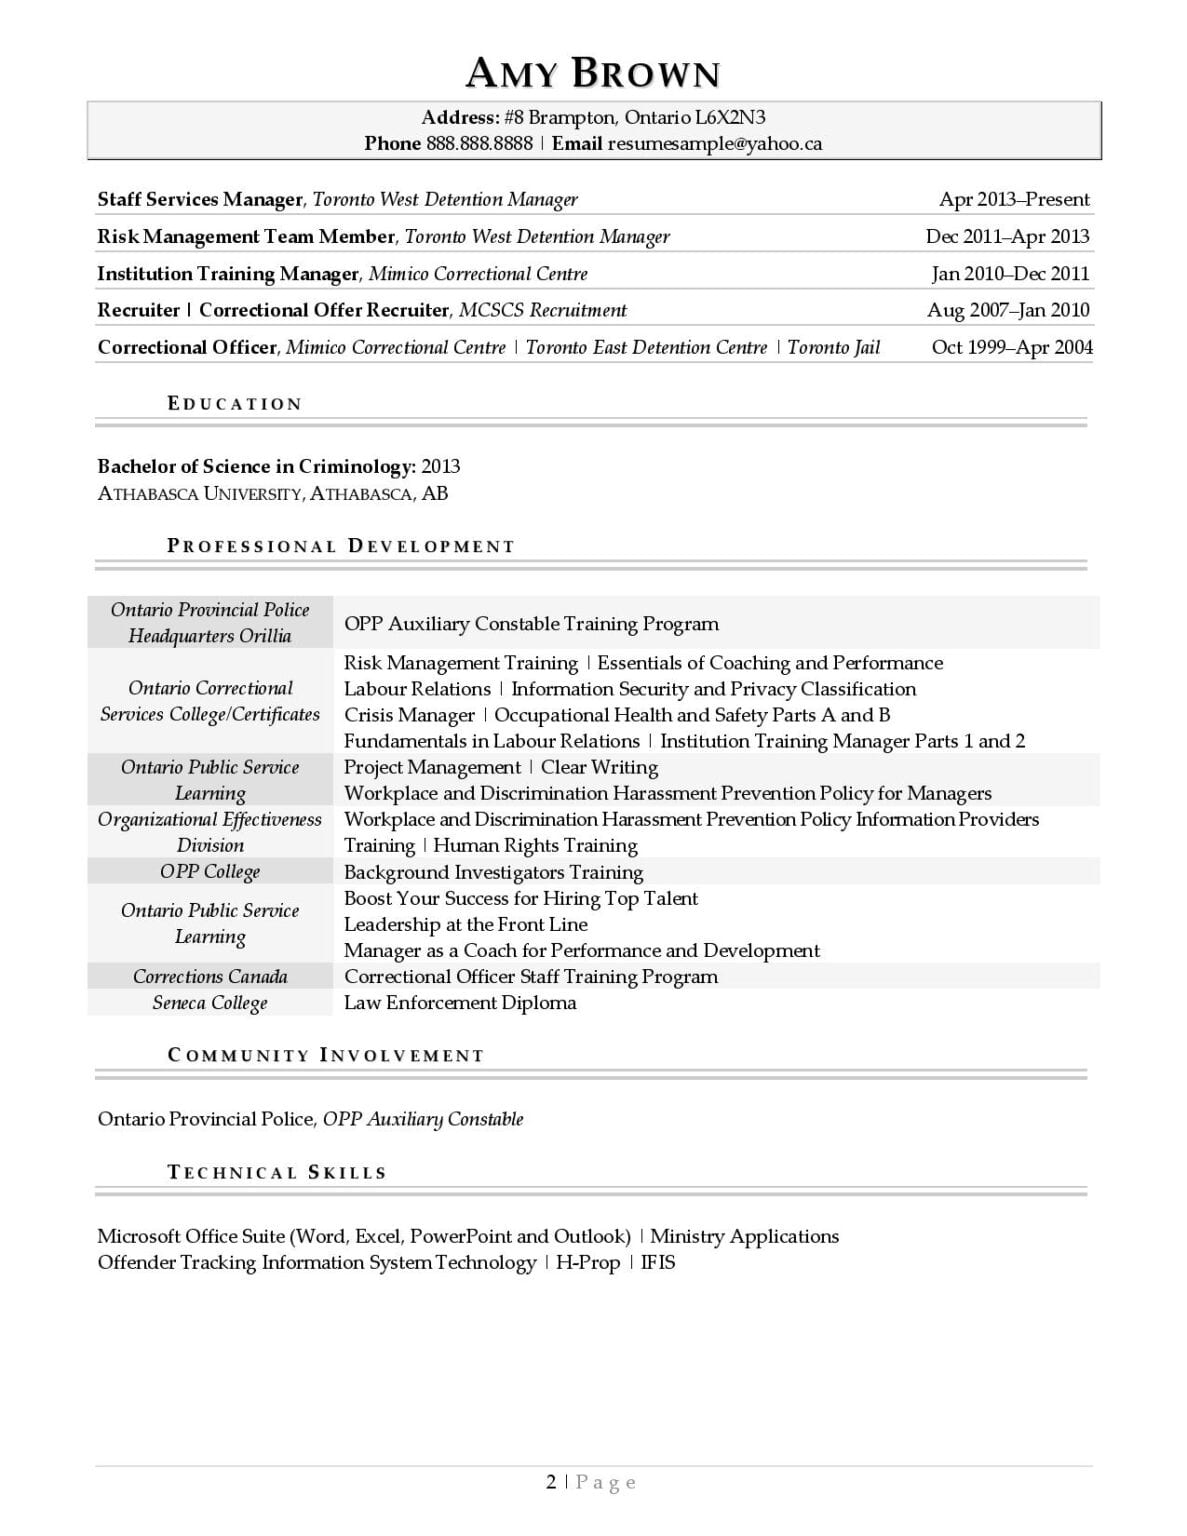 standard resume format for flight attendant